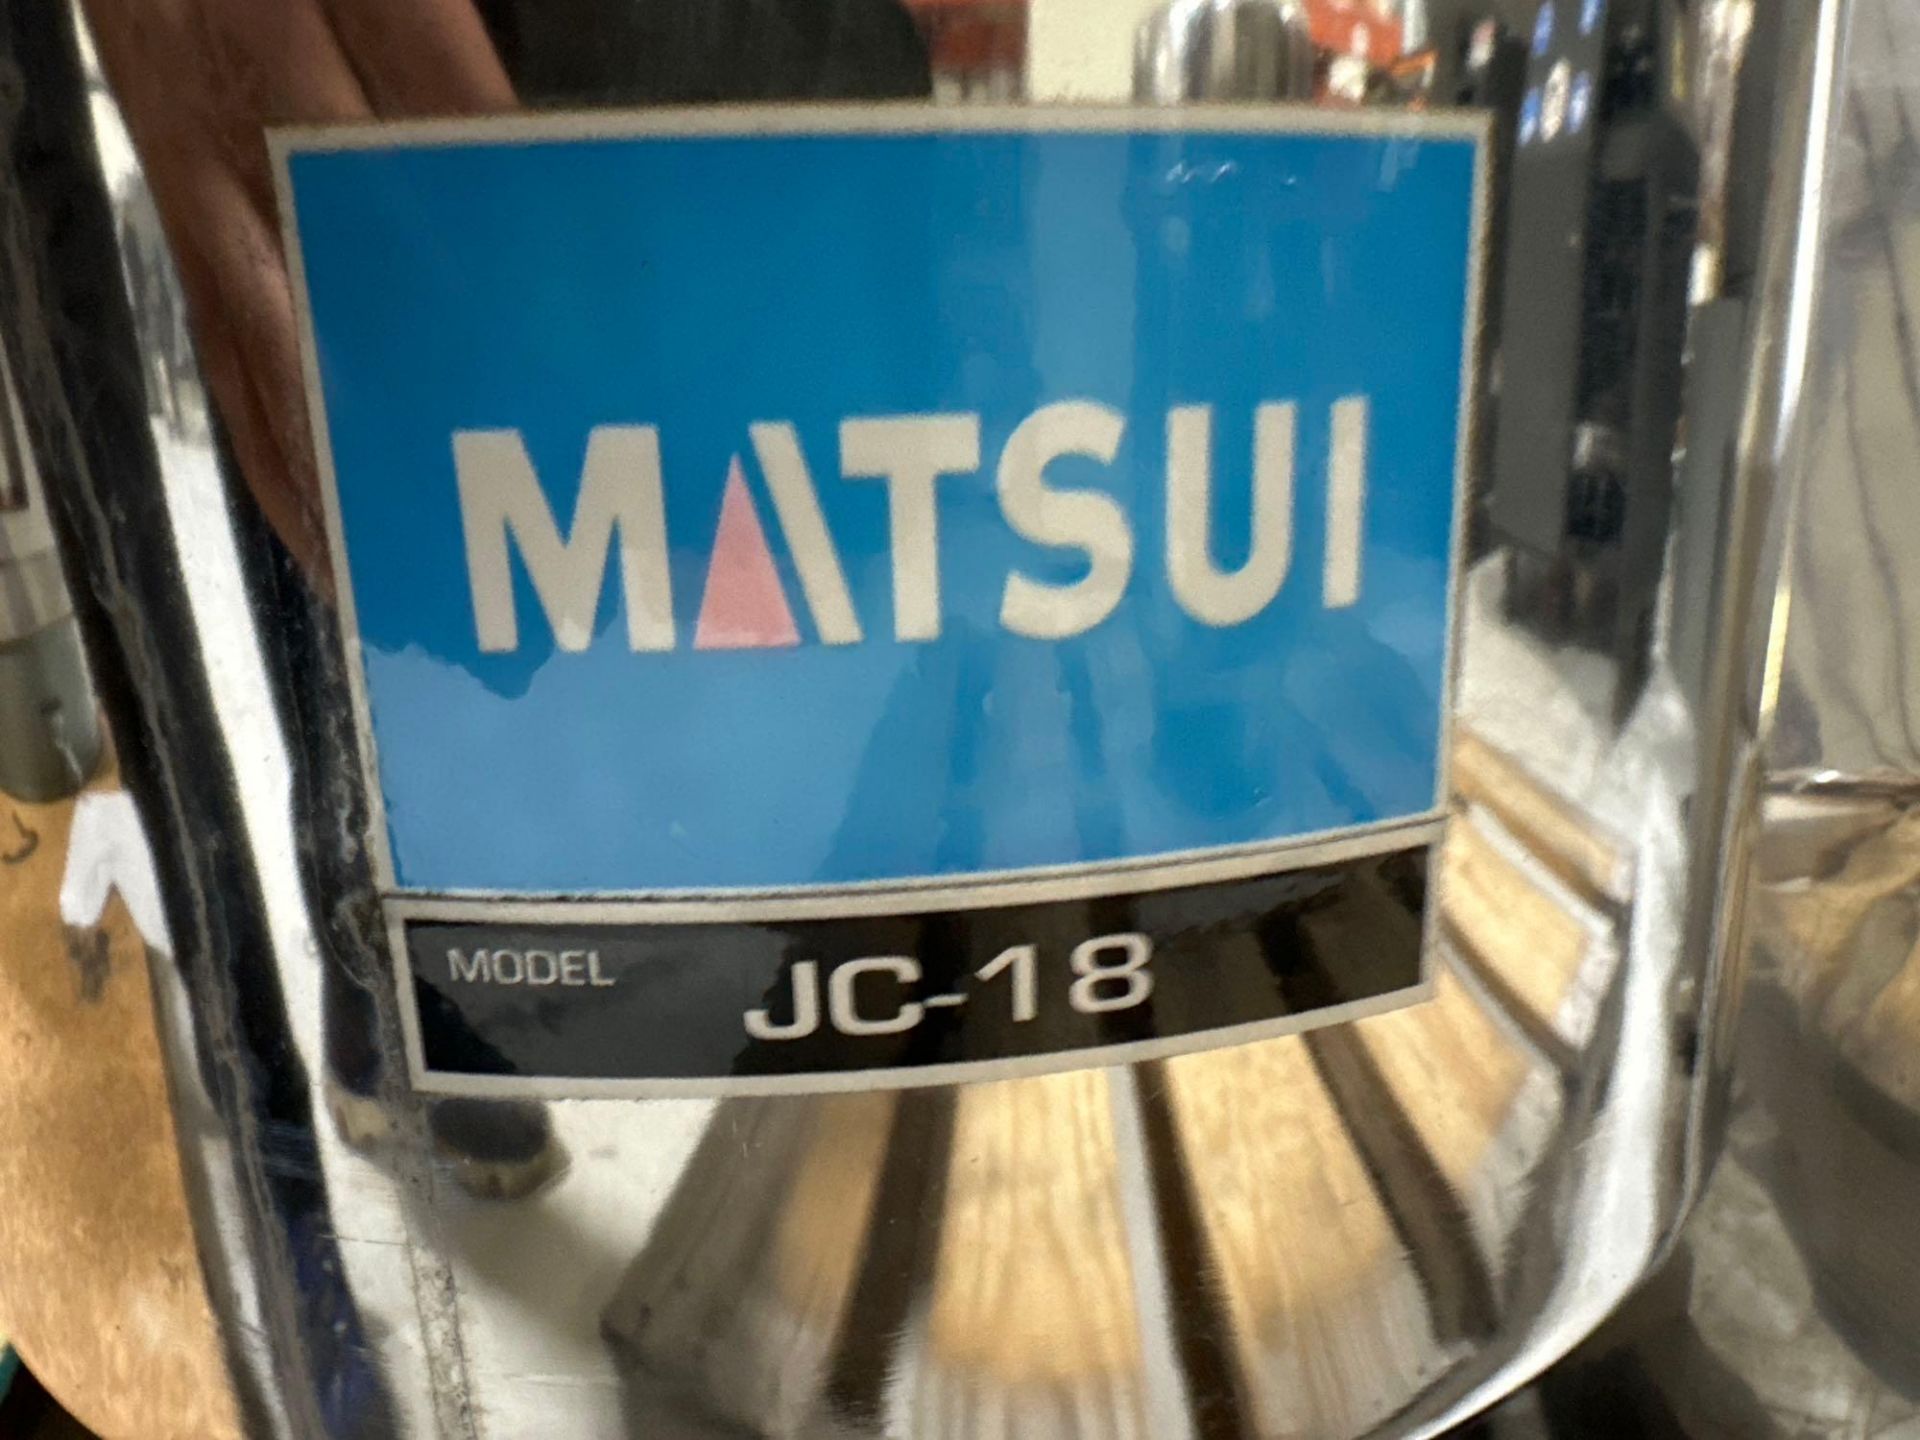 Matsui JC-18 Loader - Image 4 of 4